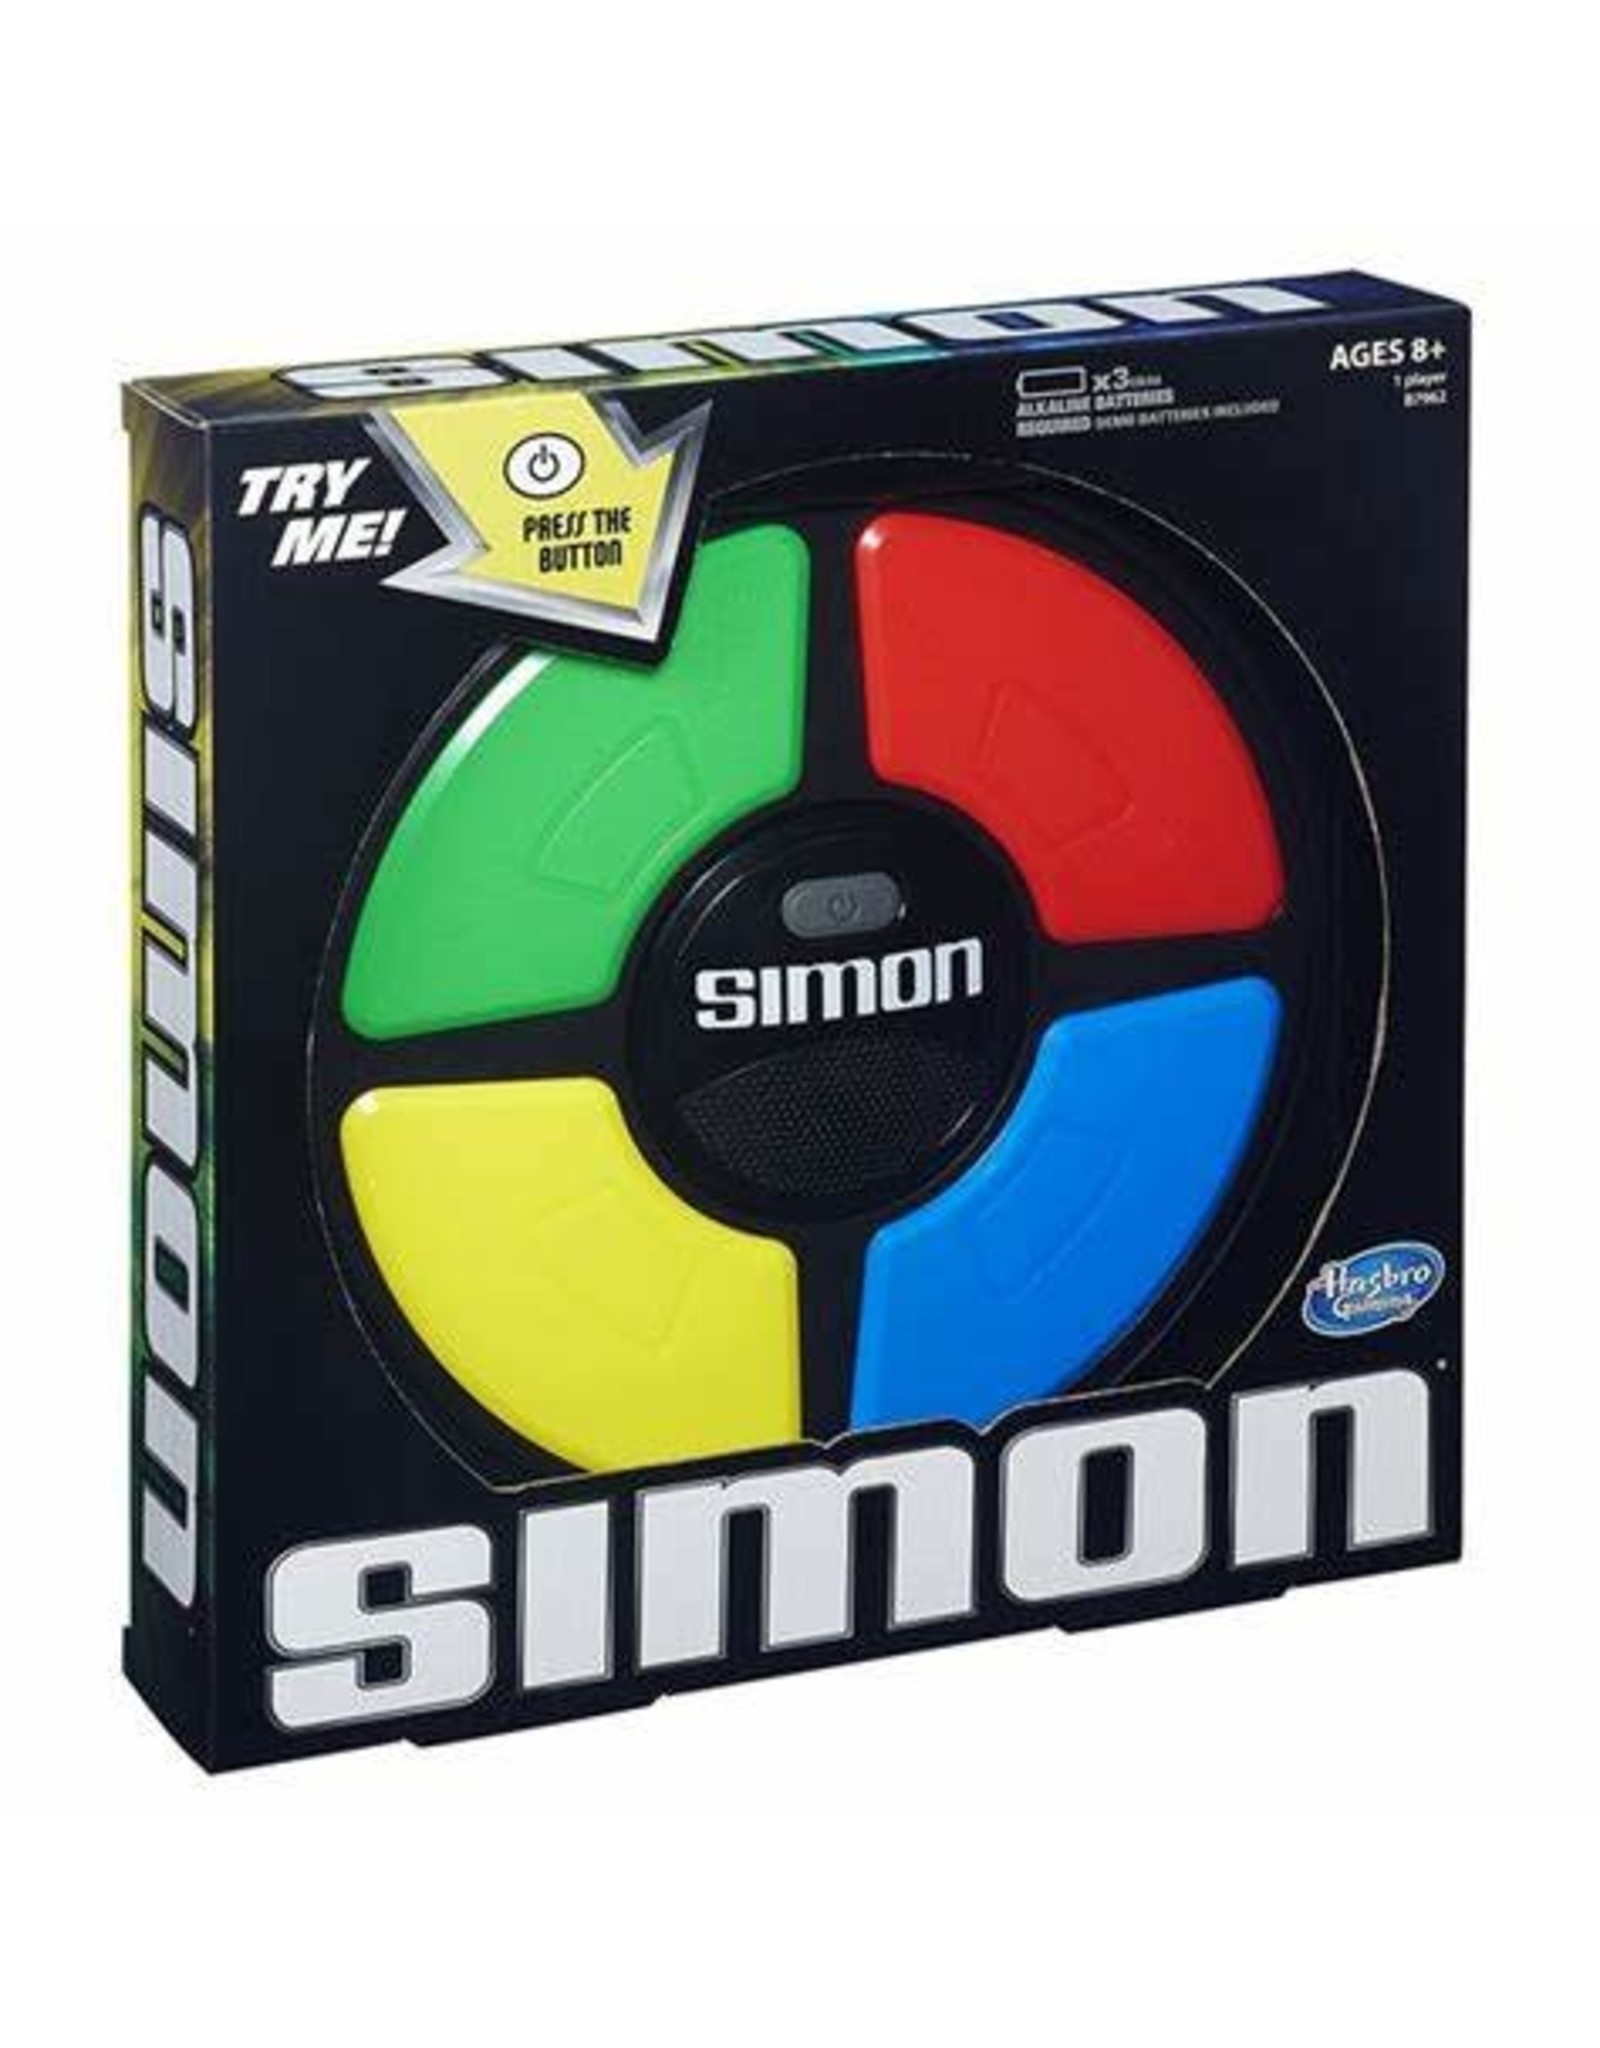 Hasbro Classic Simon